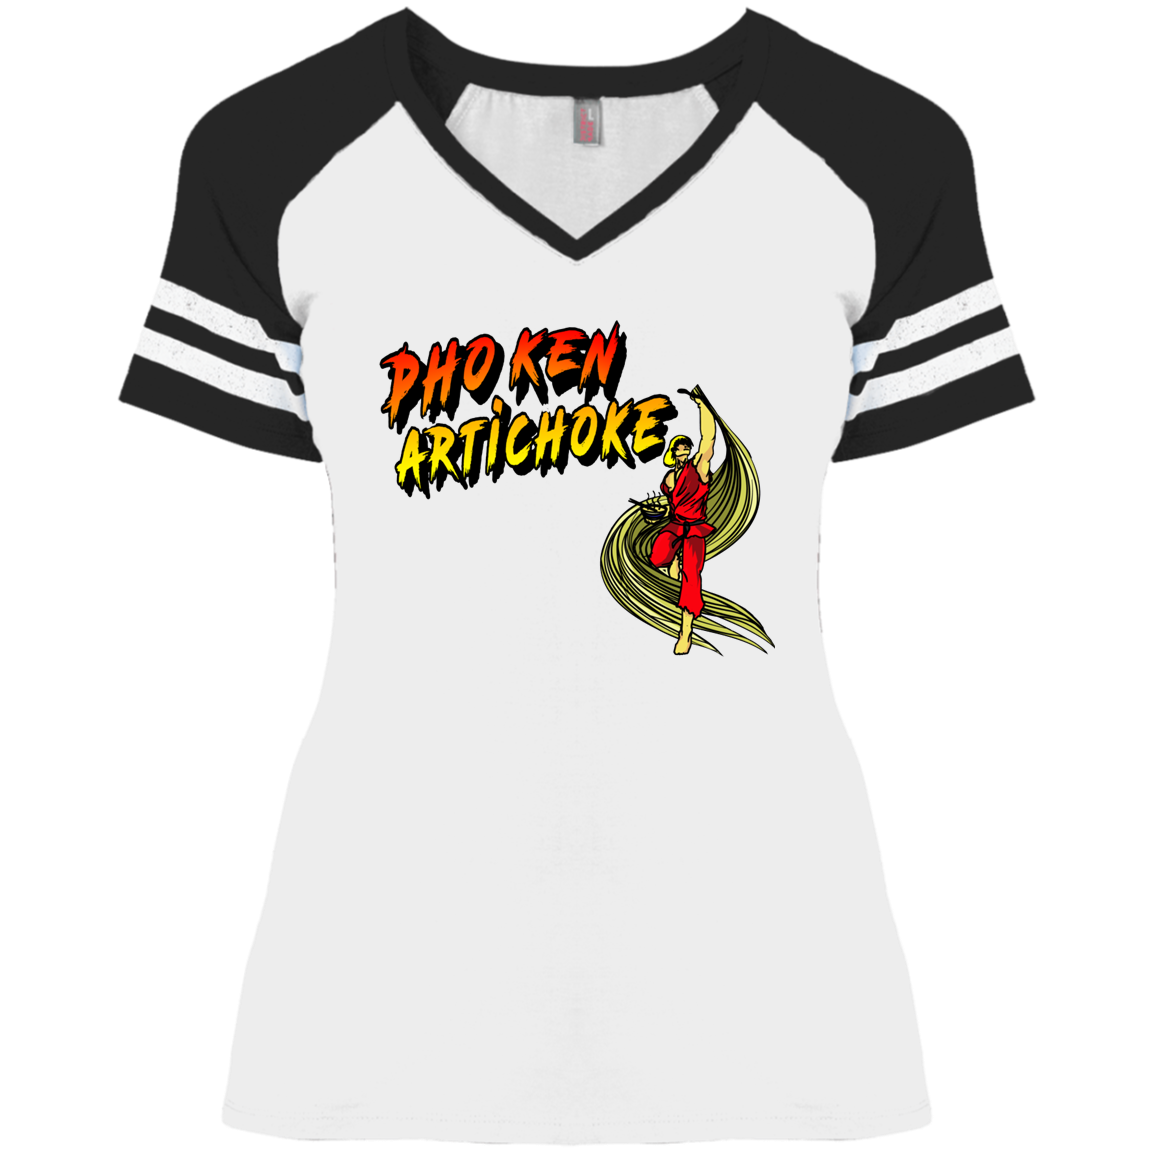 ArtichokeUSA Custom Design. Pho Ken Artichoke. Street Fighter Parody. Gaming. Ladies' Game V-Neck T-Shirt